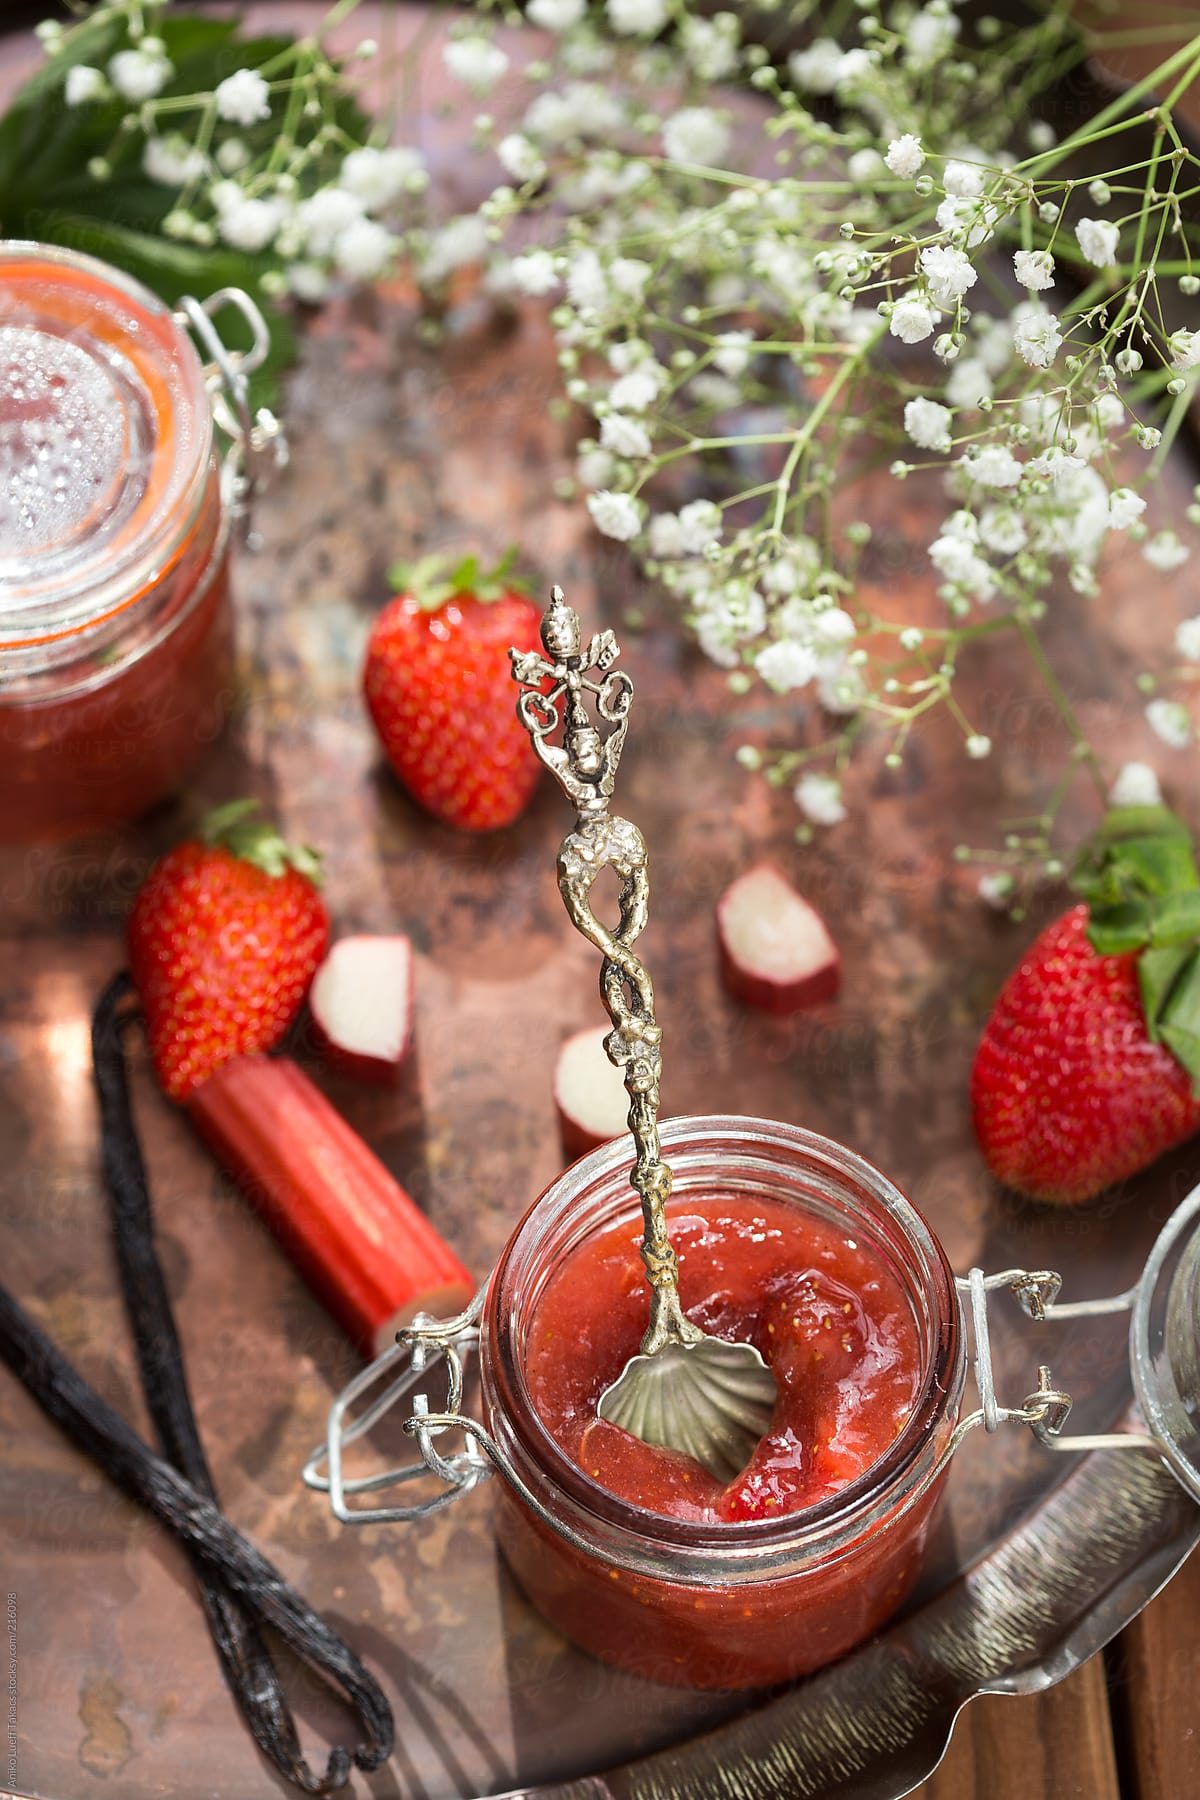 Strawberry and Rhubarb Jam in a jar